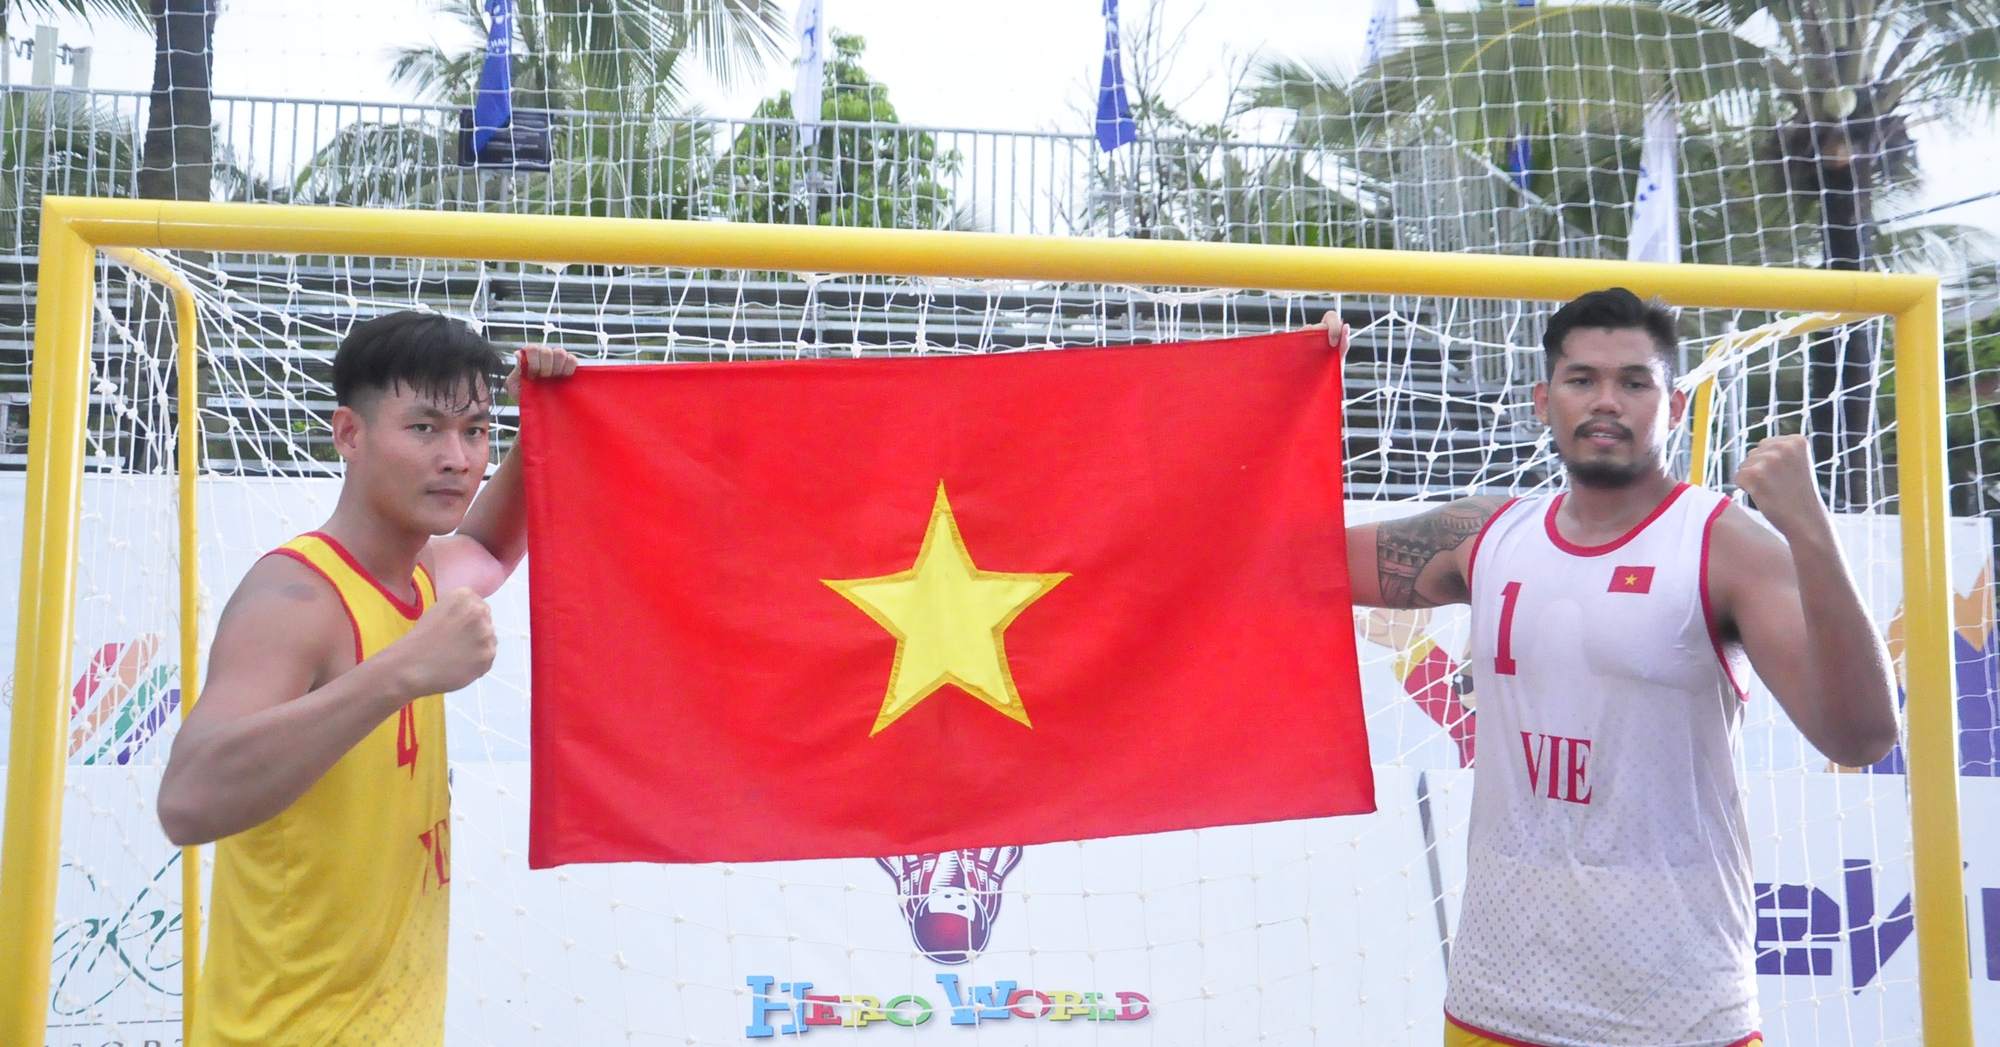 Winning gold 1 round early, what does the Vietnamese beach handball team share?